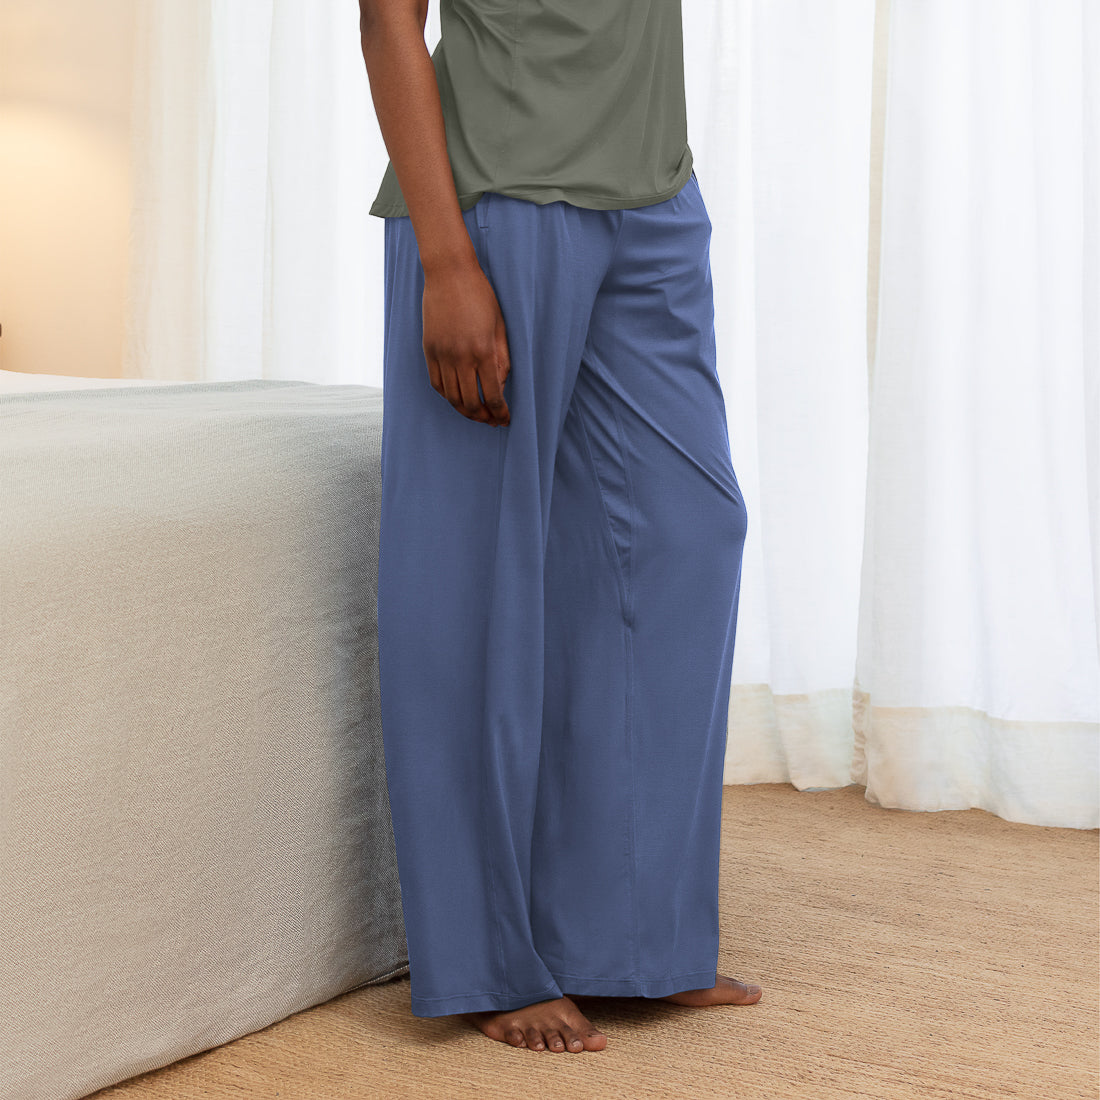 100% Cotton Jersey Knit Women Pajama Pants Sleepwear - Walmart.com